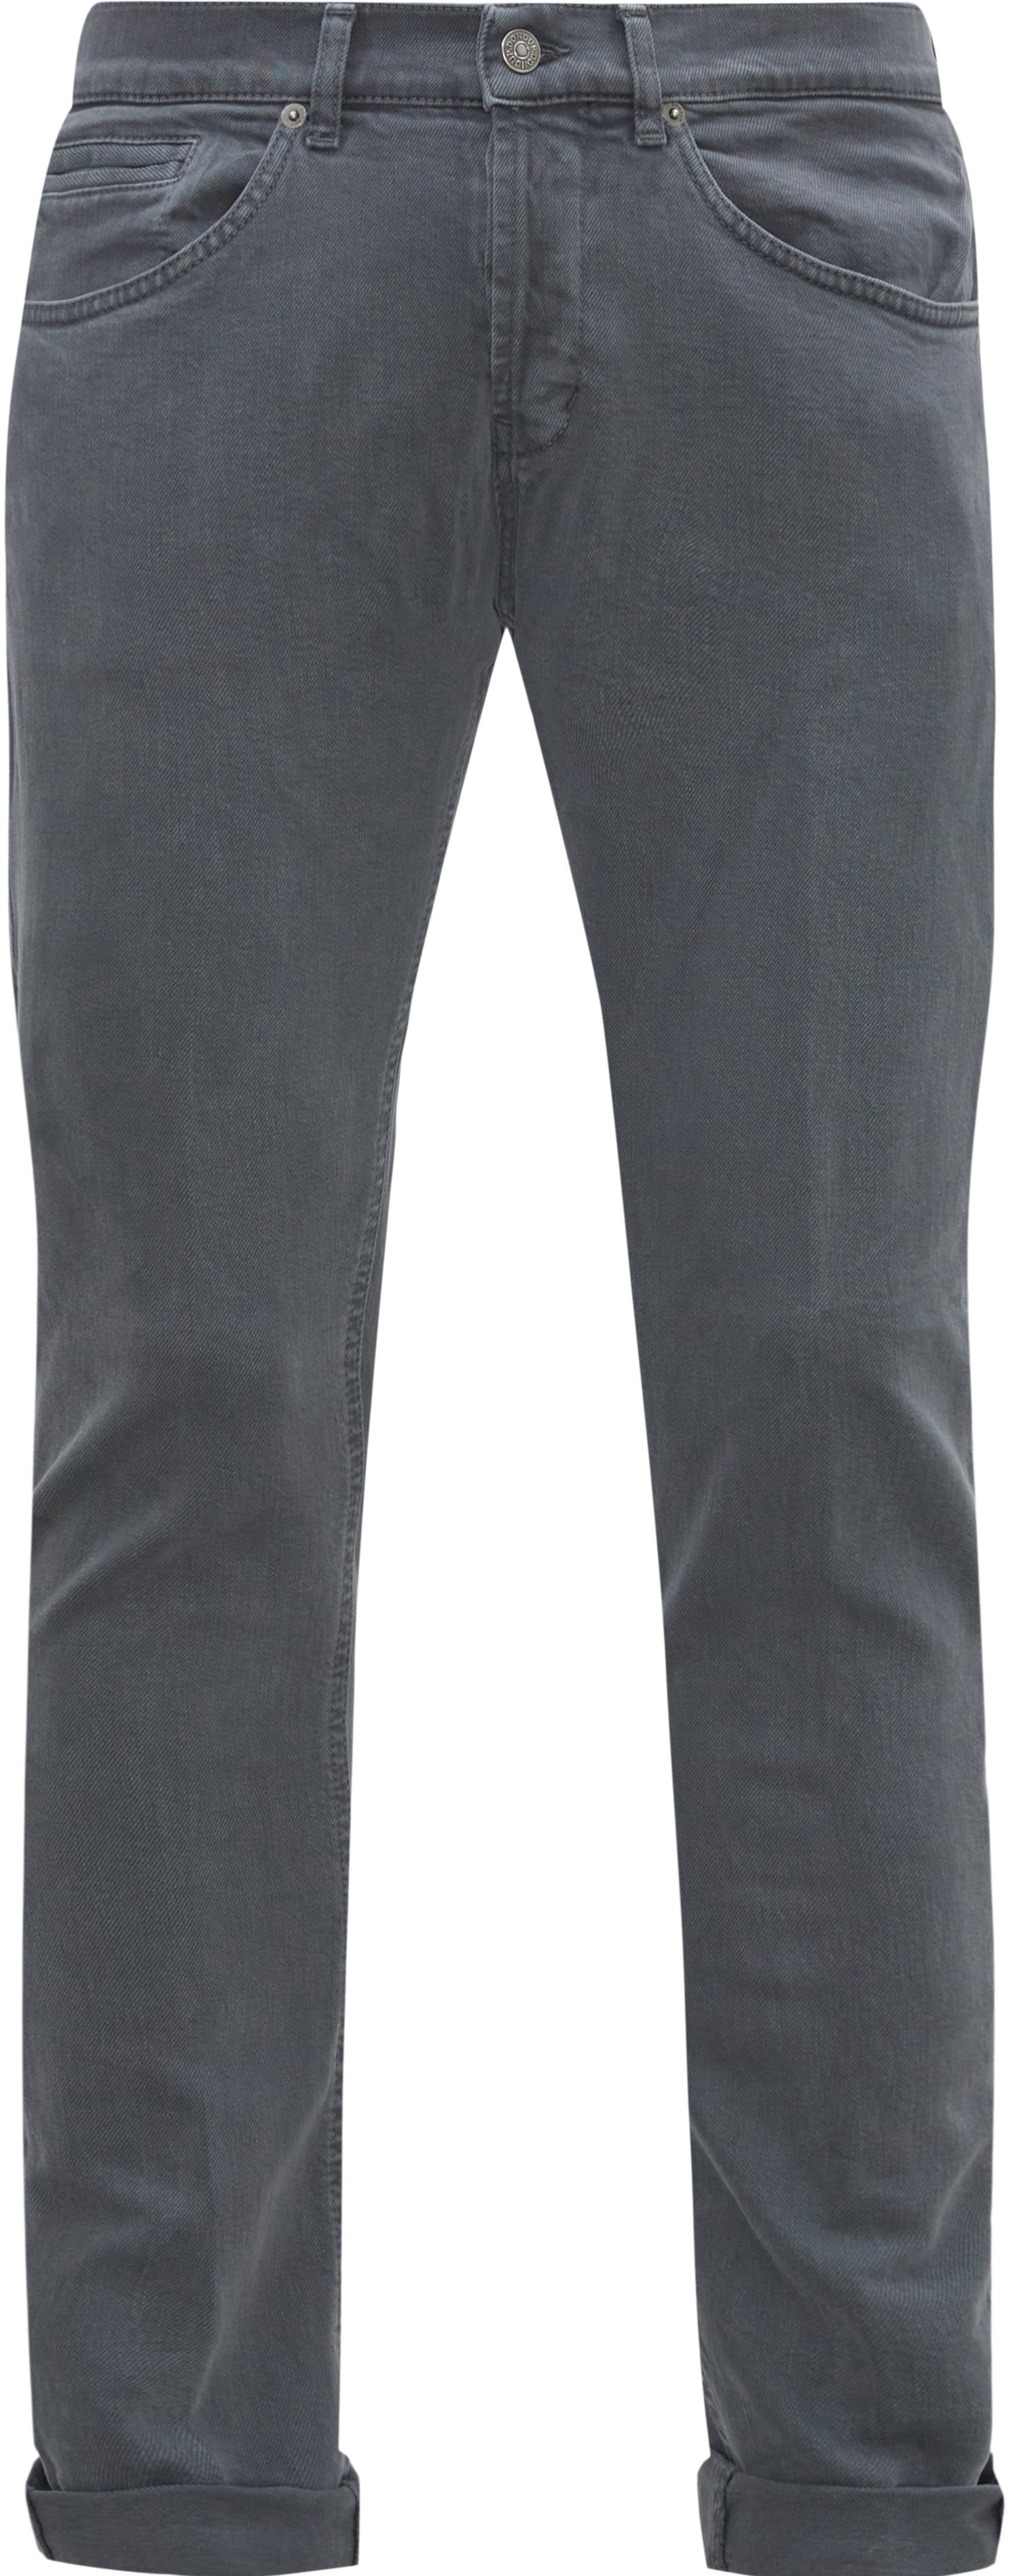 Jeans - Slim fit - Grå